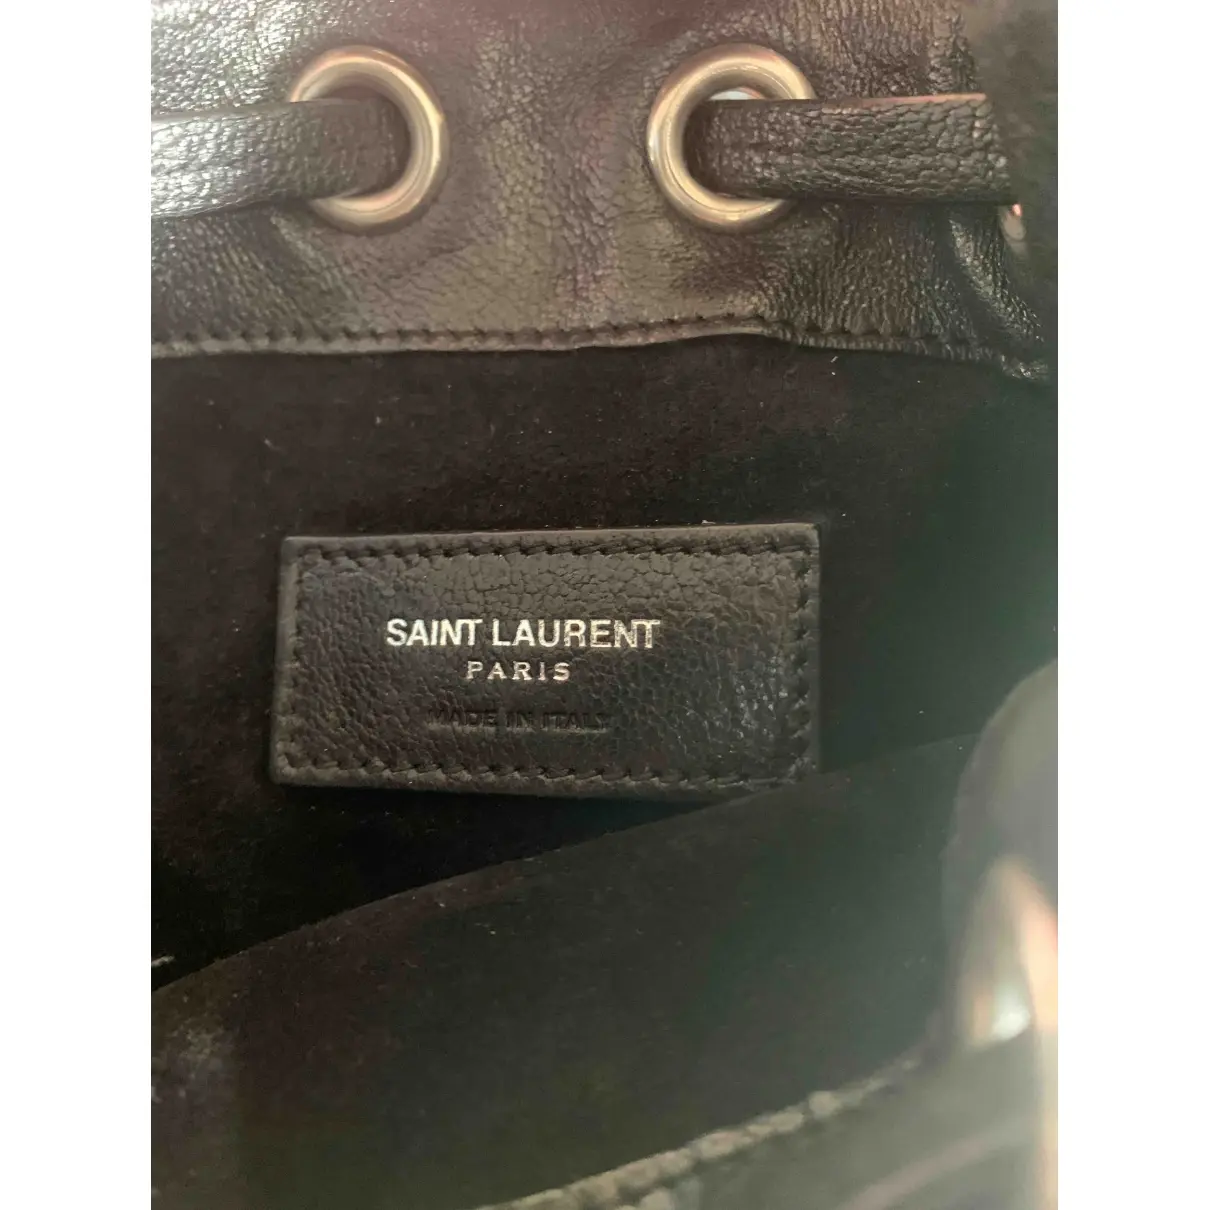 Buy Saint Laurent Emmanuelle leather crossbody bag online